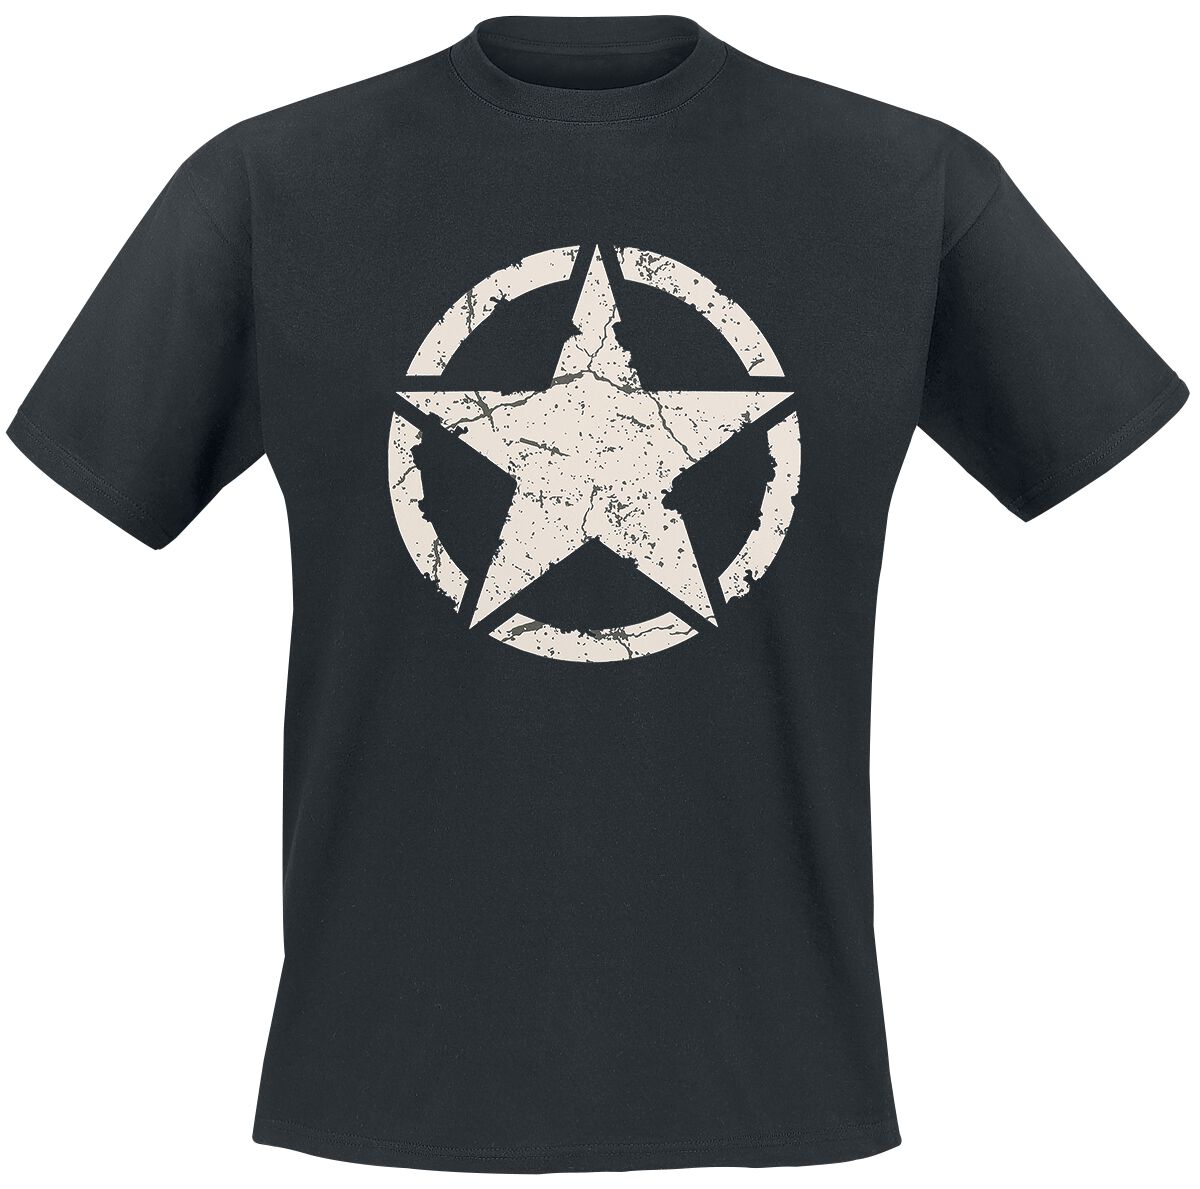 Gasoline Bandit Army Star T-Shirt black